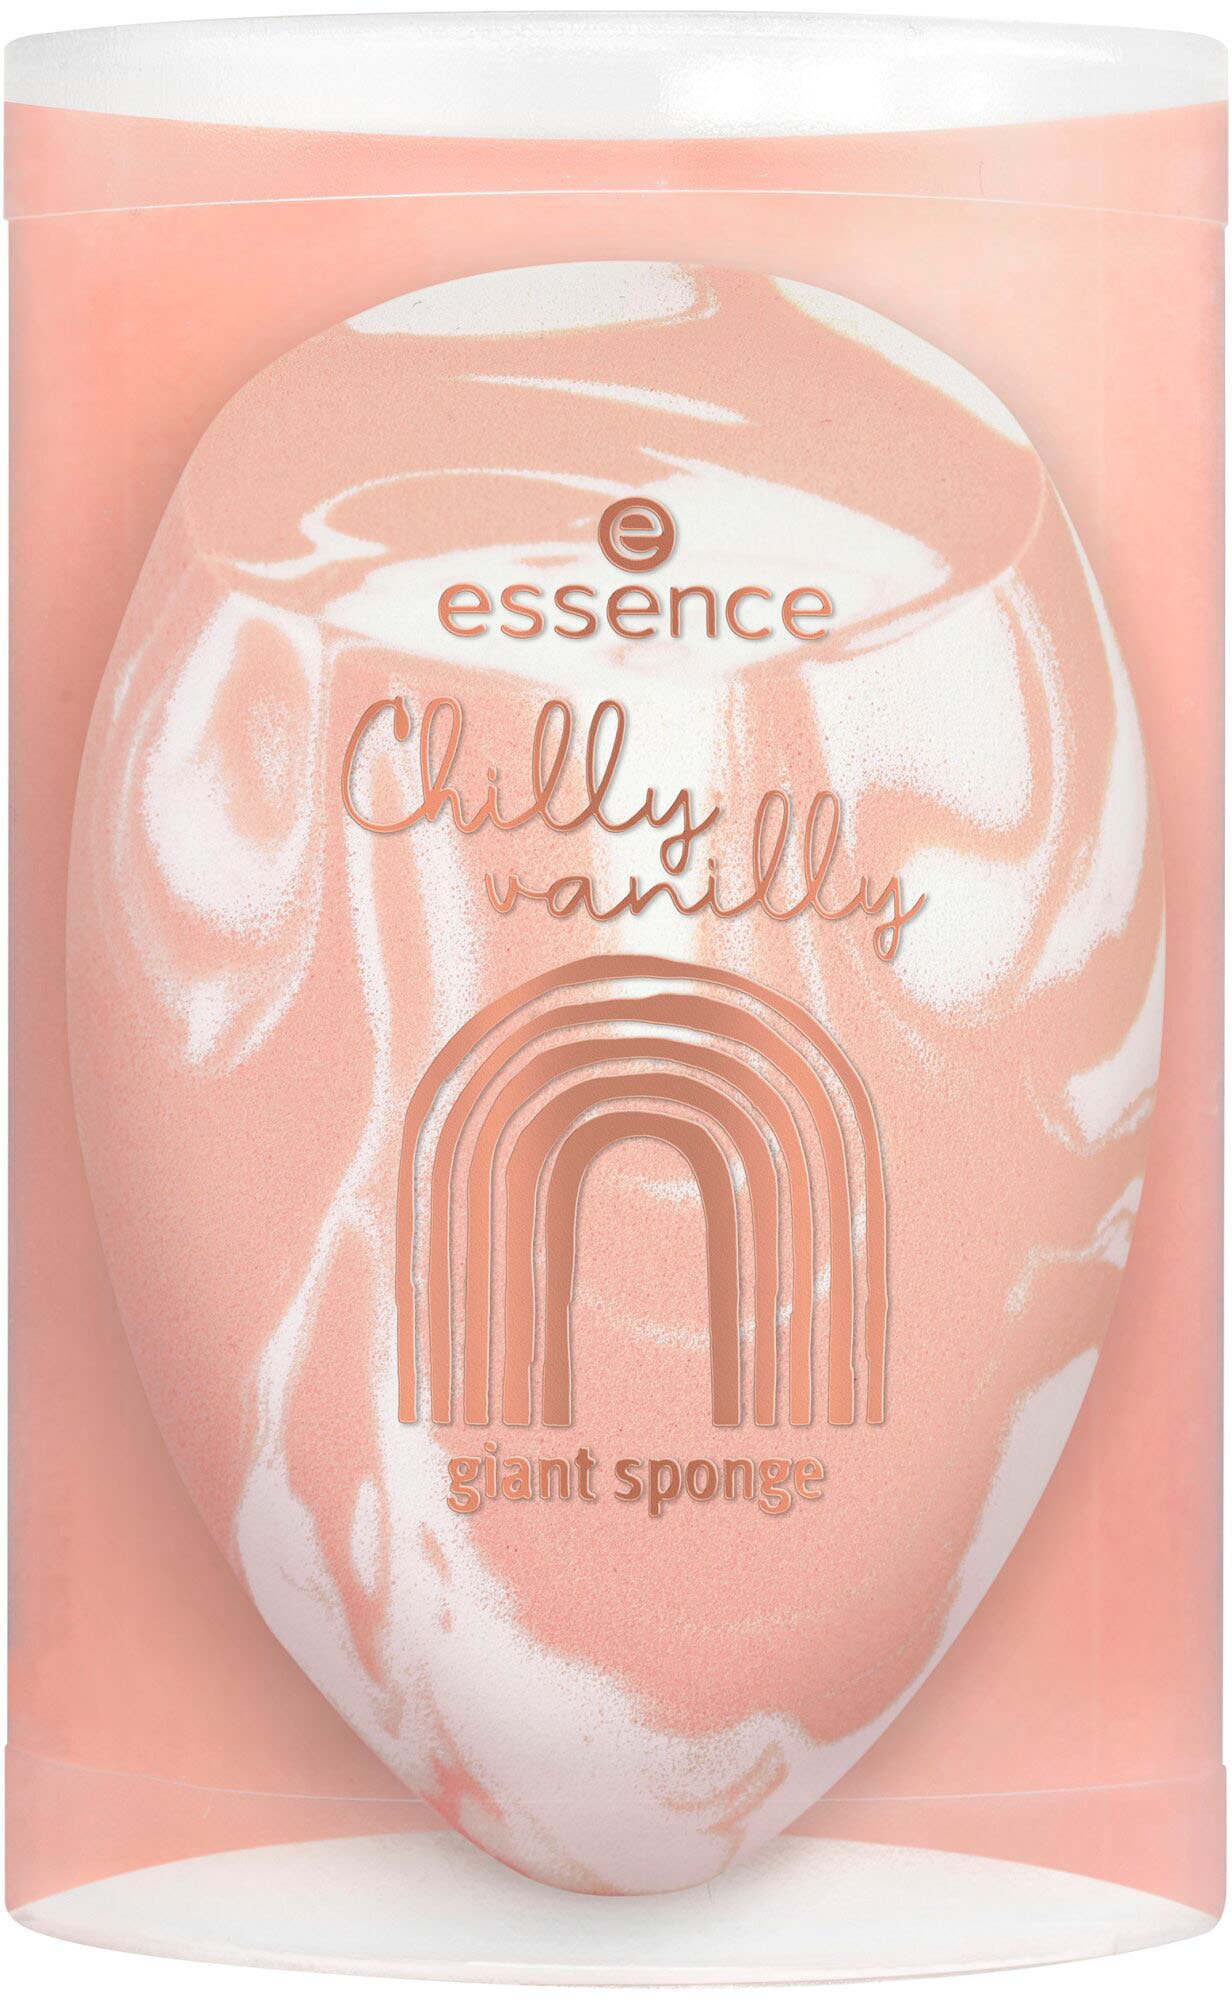 Essence Make-up Schwamm »Chilly vanilly giant sponge«, (Set, 3 tlg.) online  bei UNIVERSAL